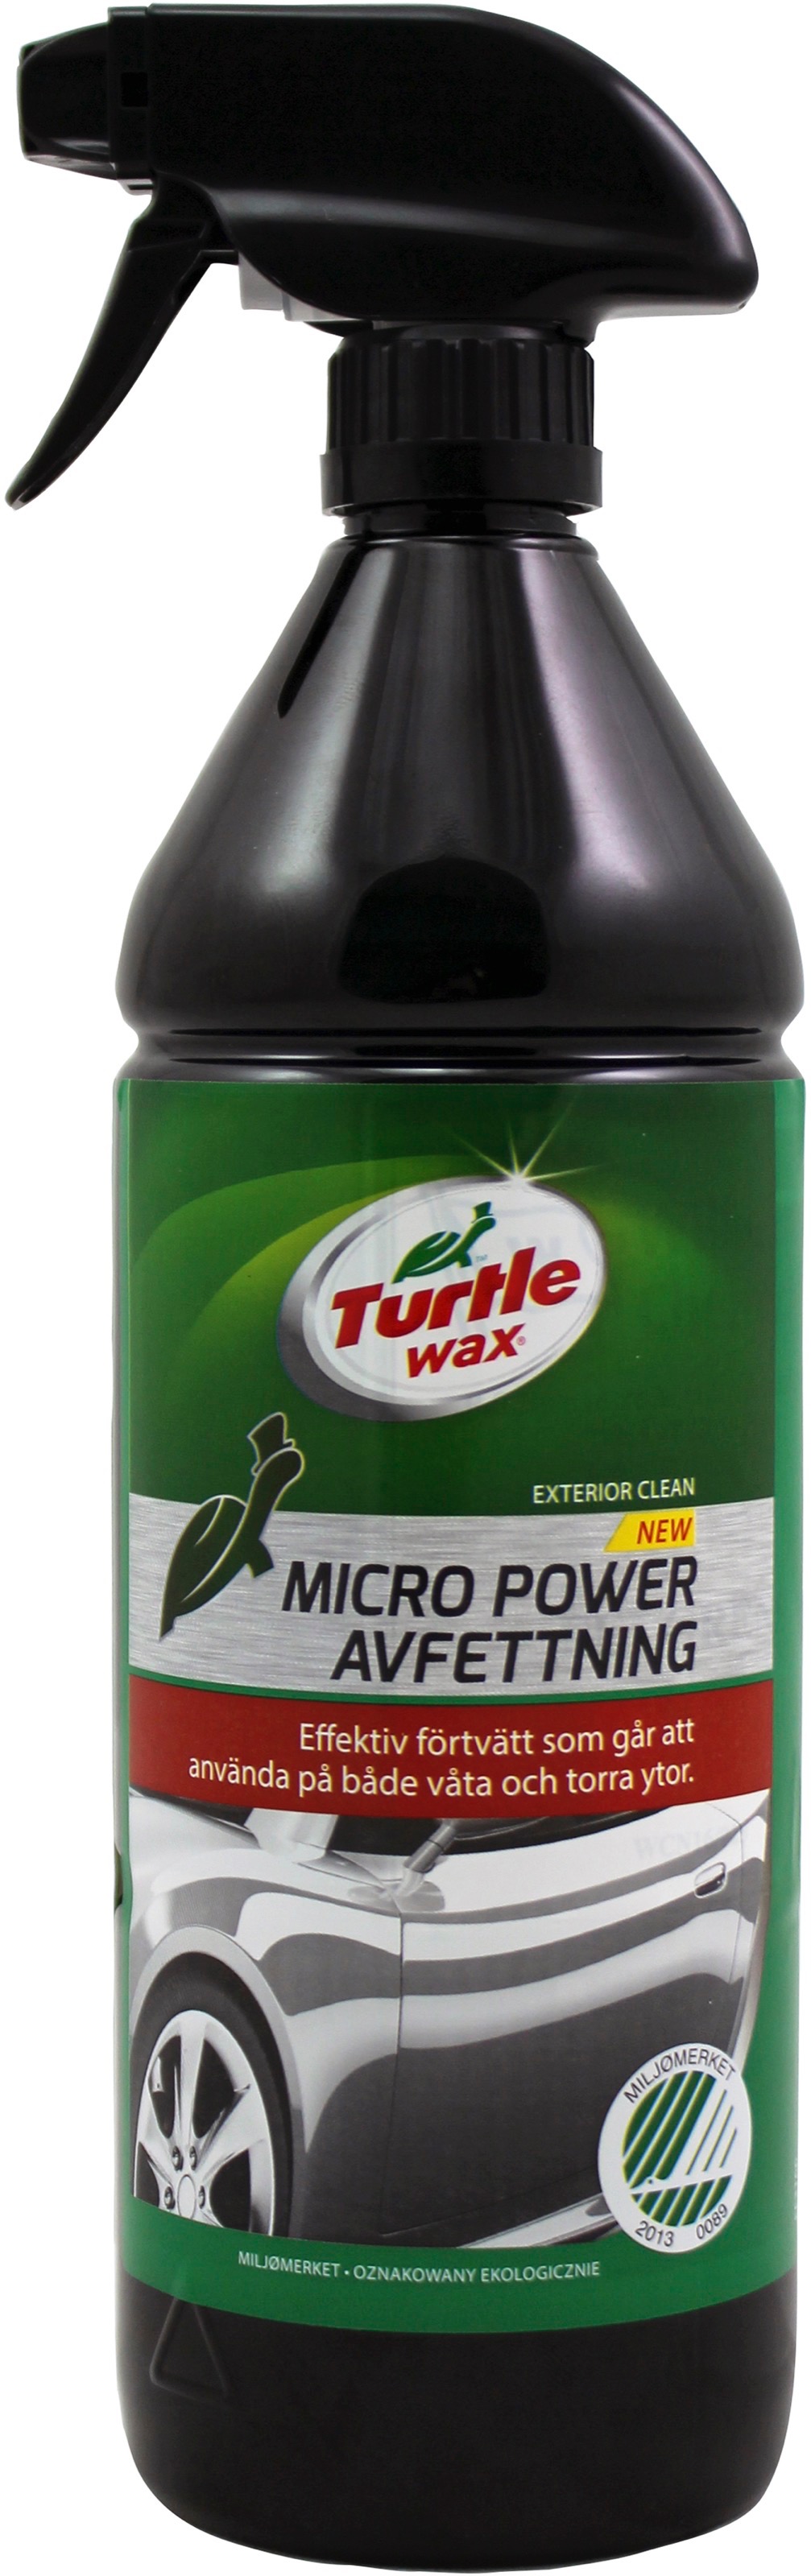 Turtle Wax Micro Power avfetting